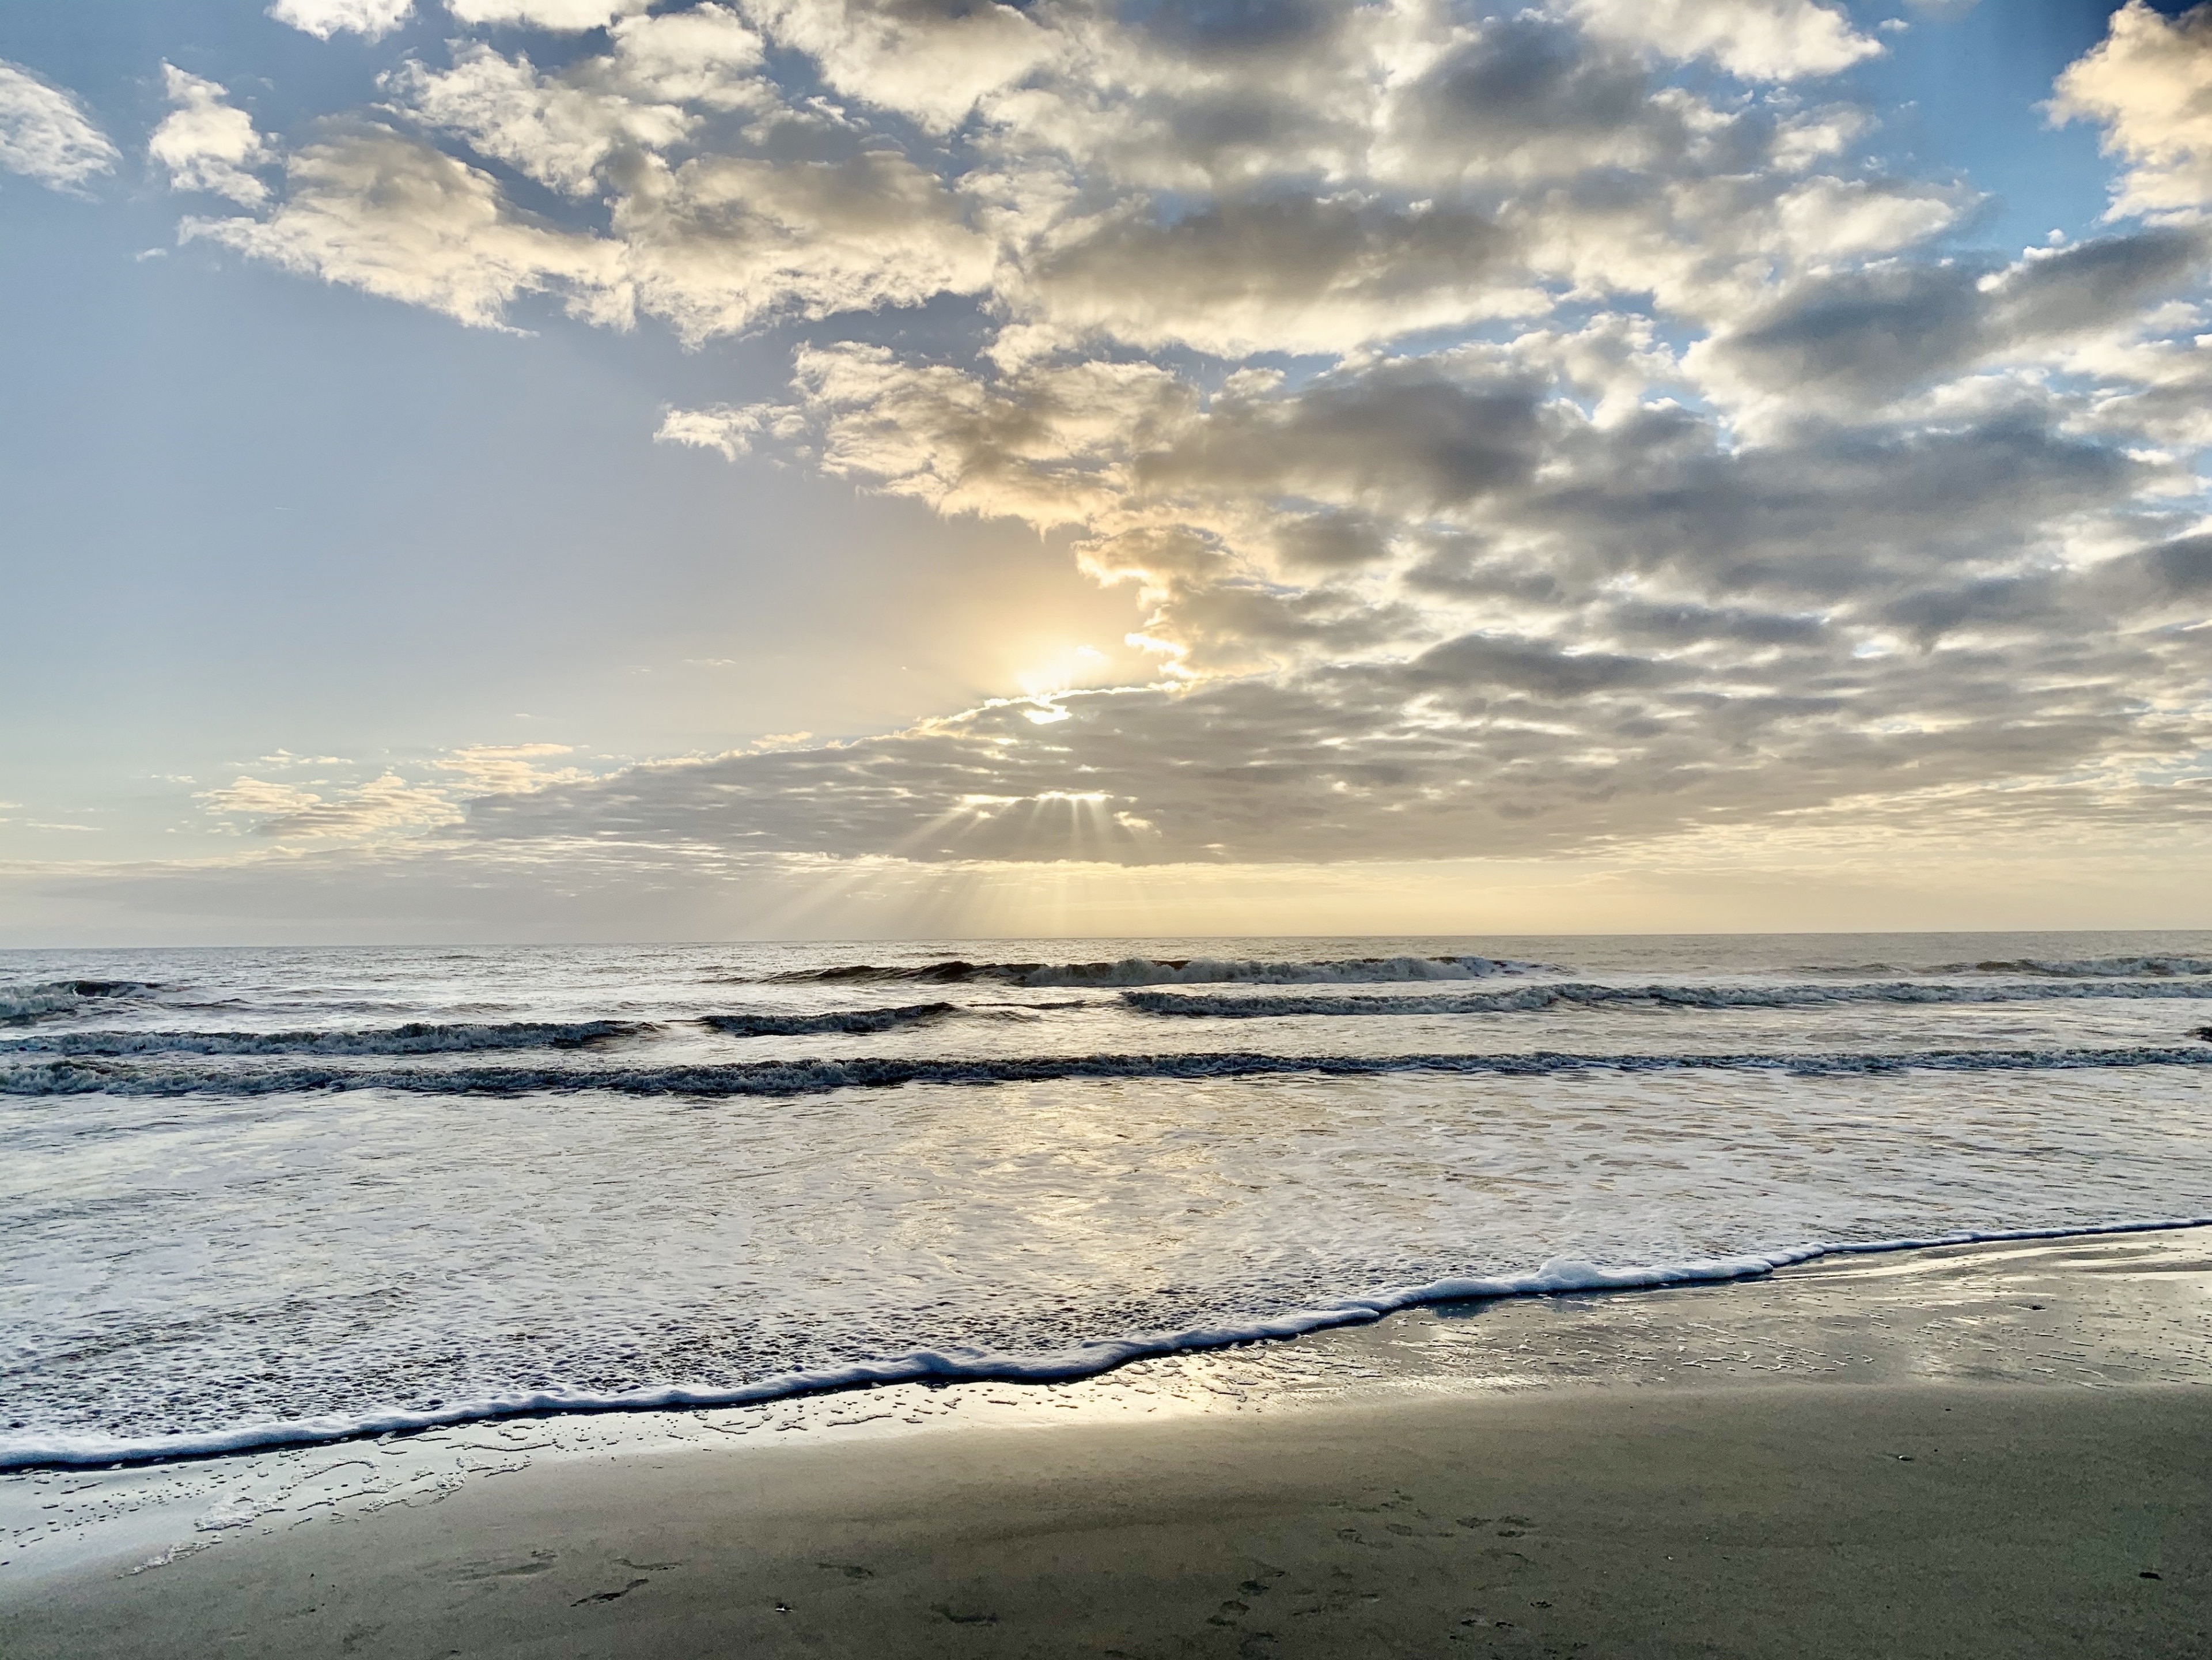 A walk on the beach for a beautiful sunrise